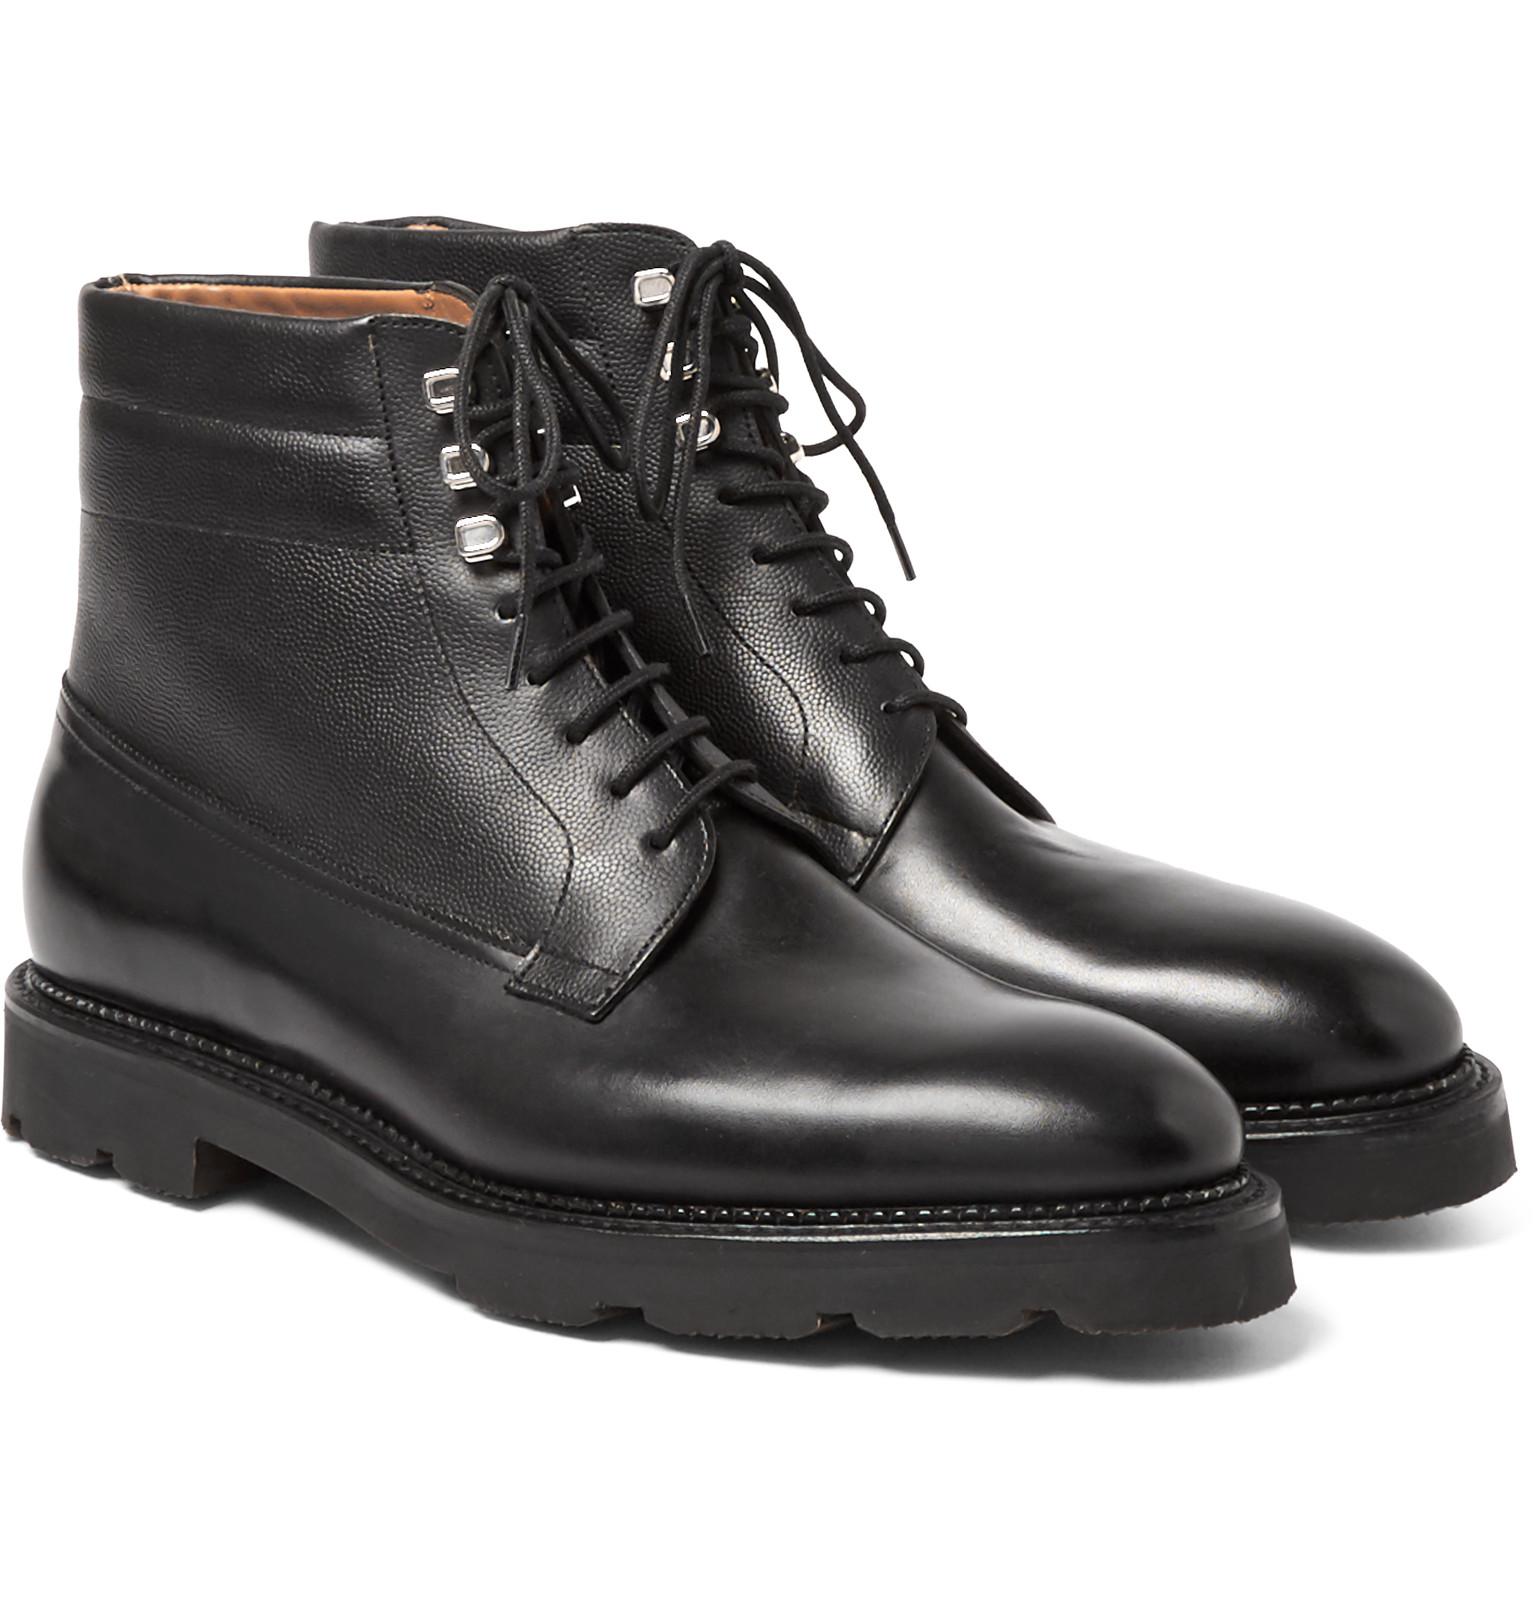 John Lobb Alder Leather Derby Boots in Black for Men - Lyst